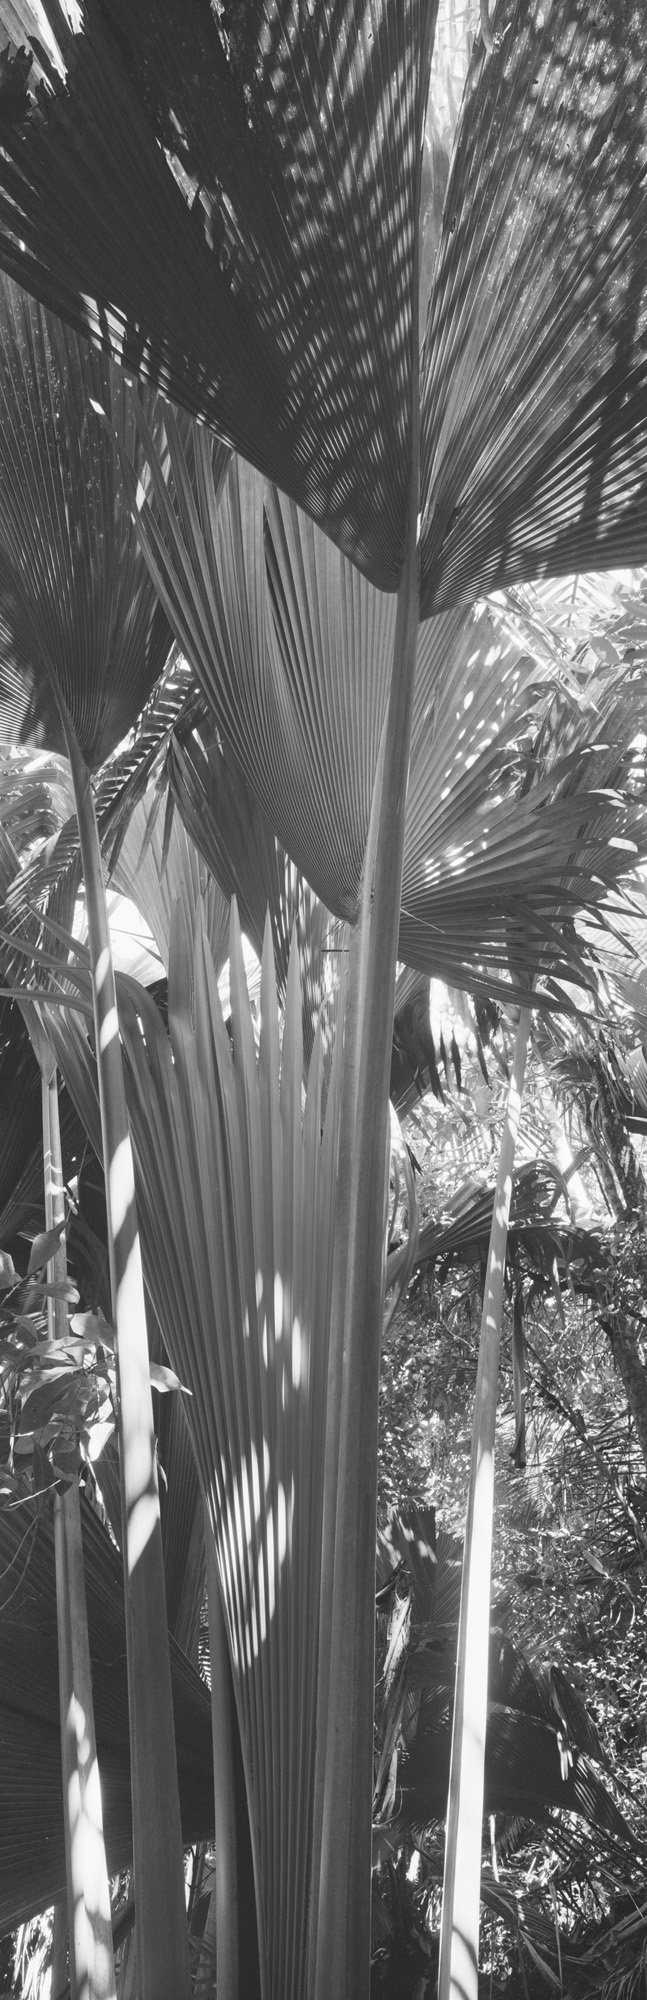 large format photography, large format photography, large format photography, photography, photography, photography, 6x17, black and white, black and white, bw, bw, fine art, art, palm trees, palm trees, ferns, ferns,